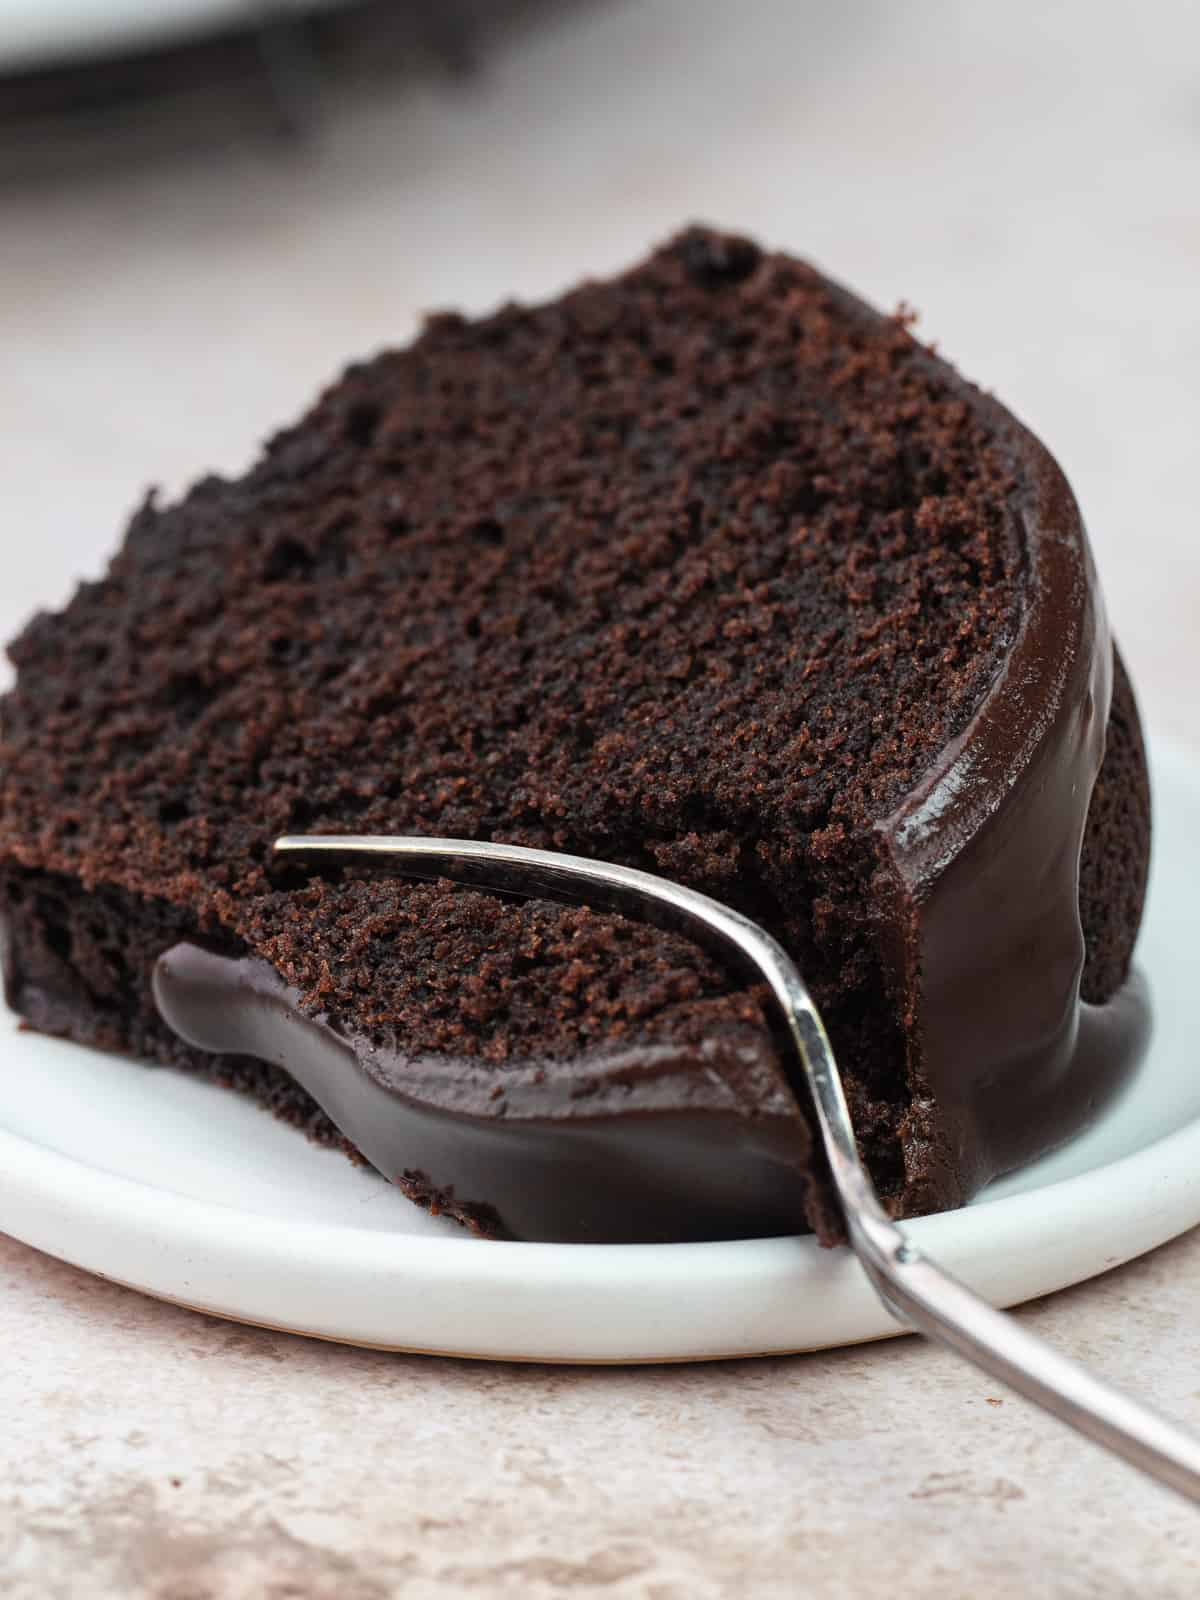 Chocolate olive oil bundt cake slice on plate with fork